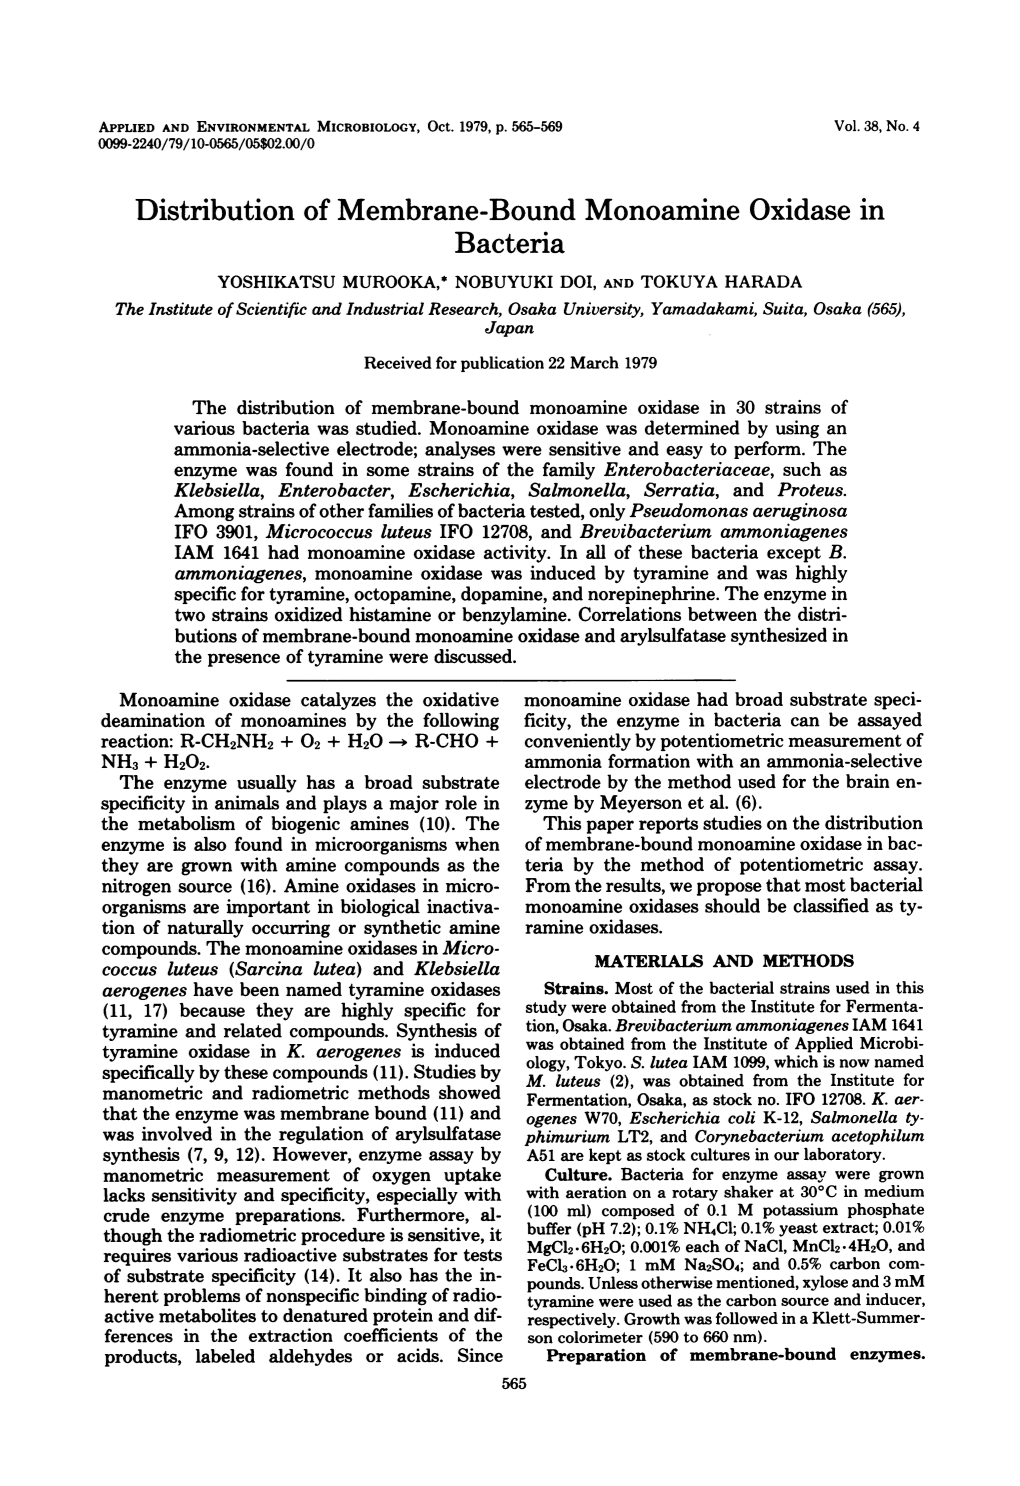 Distribution of Membrane-Bound Monoamine Oxidase in Bacteria